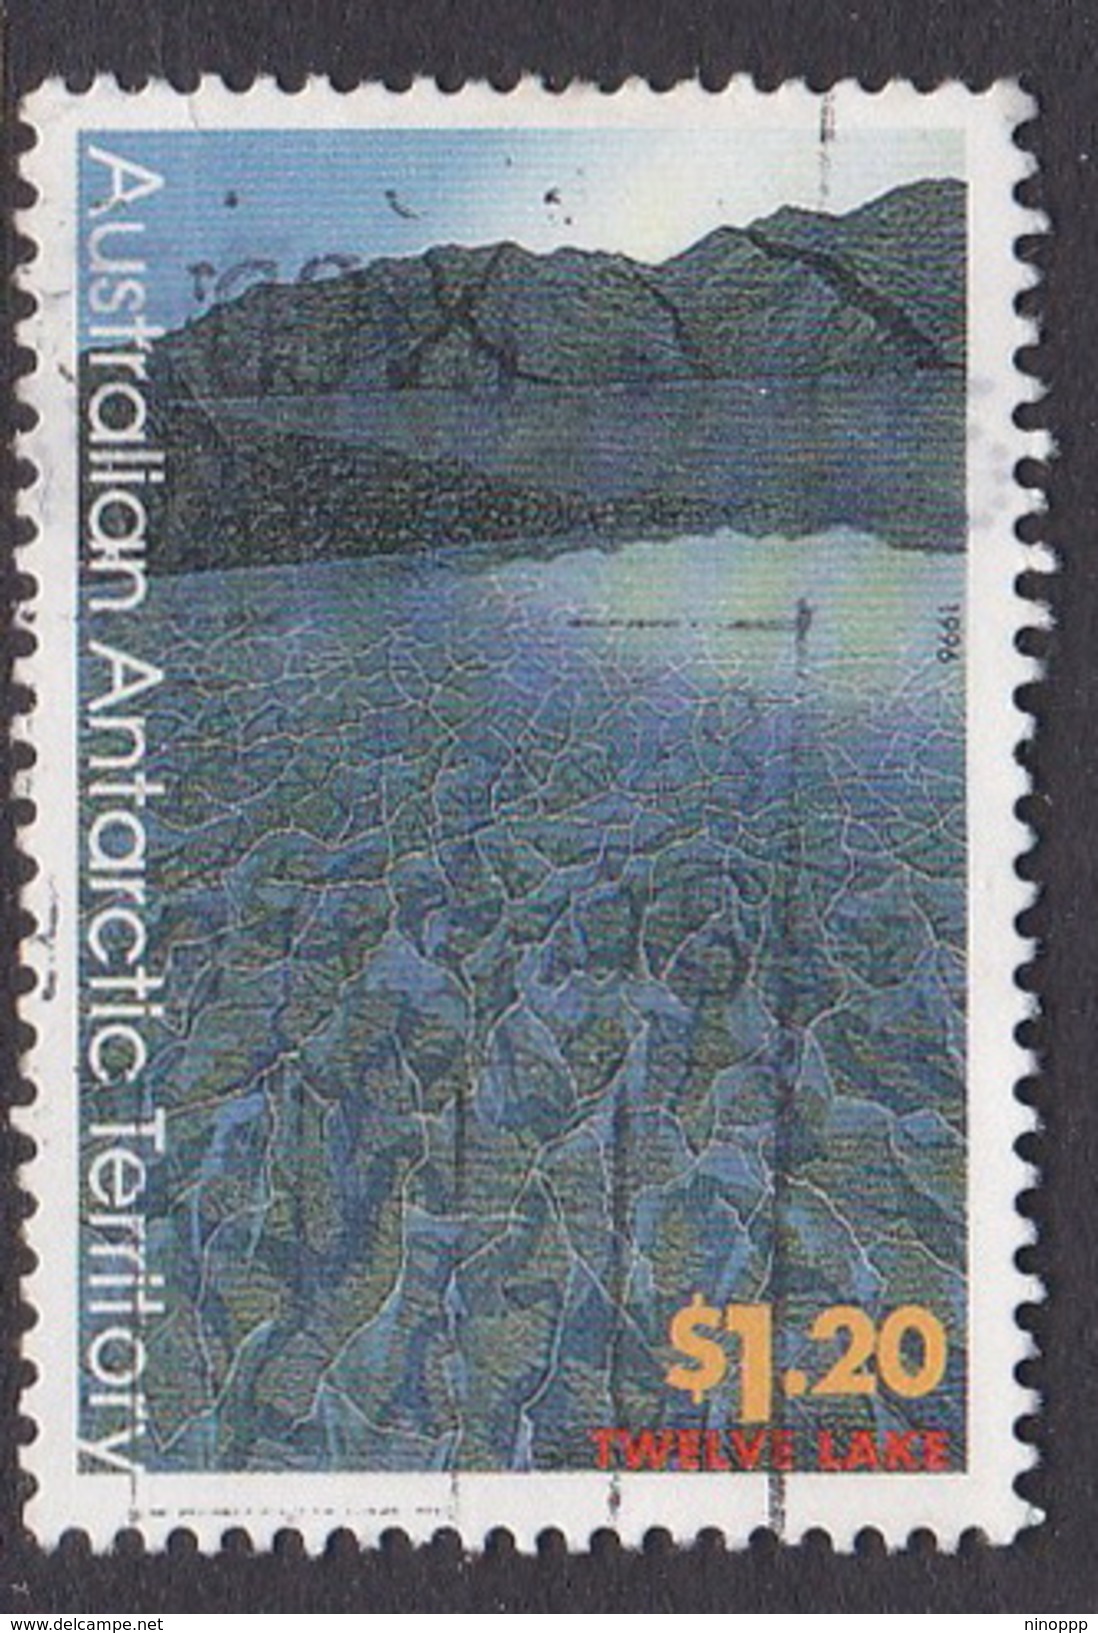 Australian Antarctic Territory  S 109 1996 Antarctic Landscapes $ 1.20 Twelve Lake Used - Used Stamps